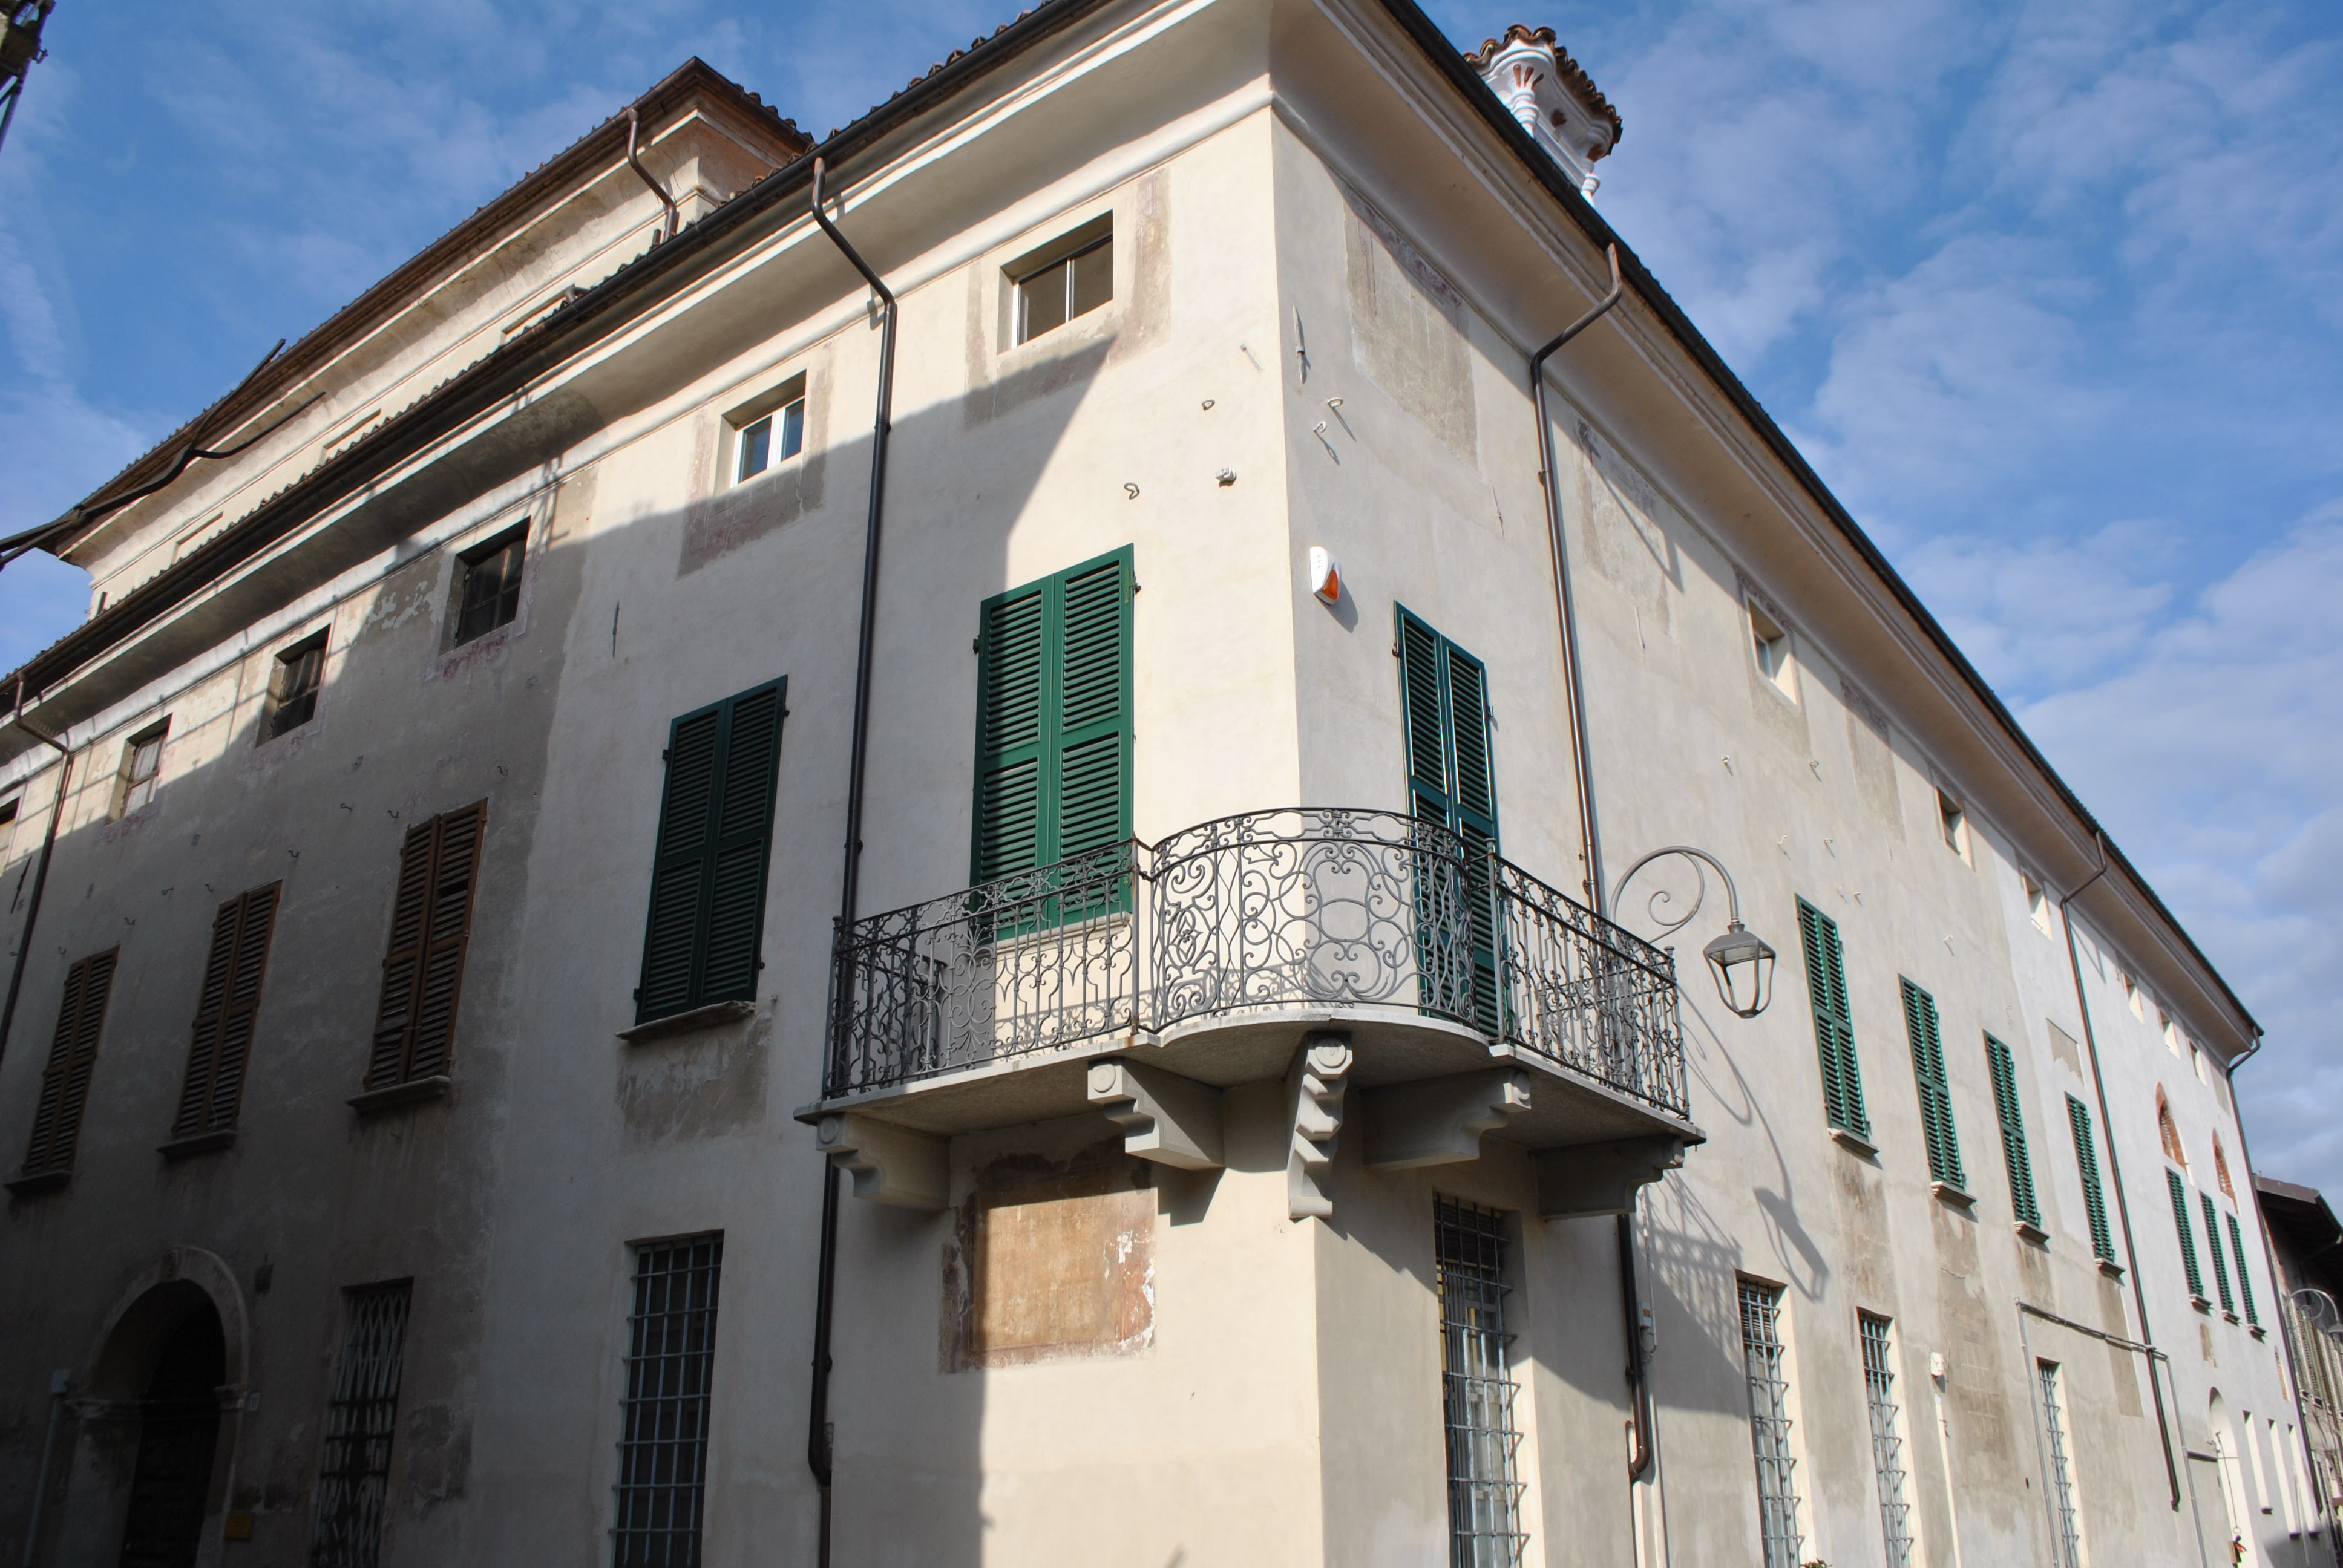 Palazzo Galateri di Genola (palazzo) - Cherasco (CN)  (XVII)